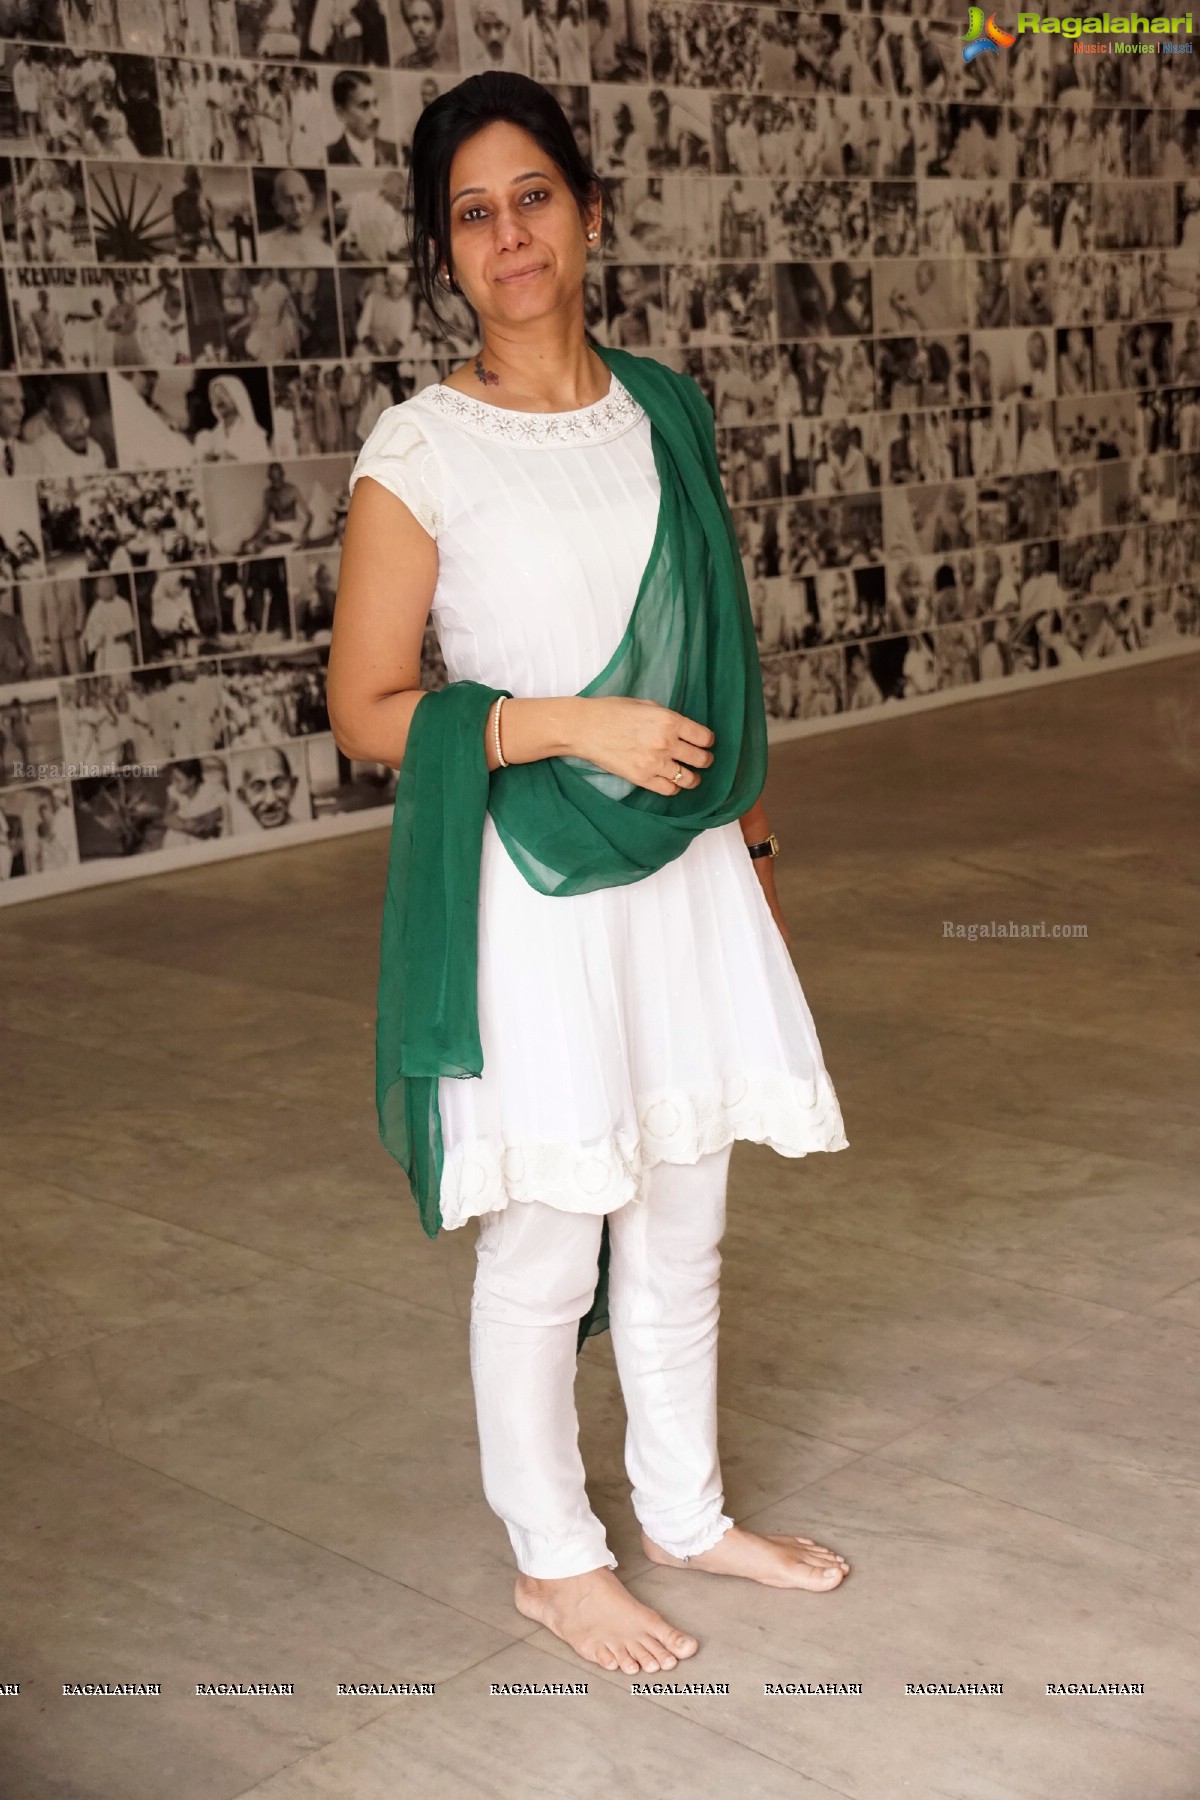 I am Gandhi - An Interactive Program by Sanskruti Ladies Club at Mahatma Gandhi Digital Museum